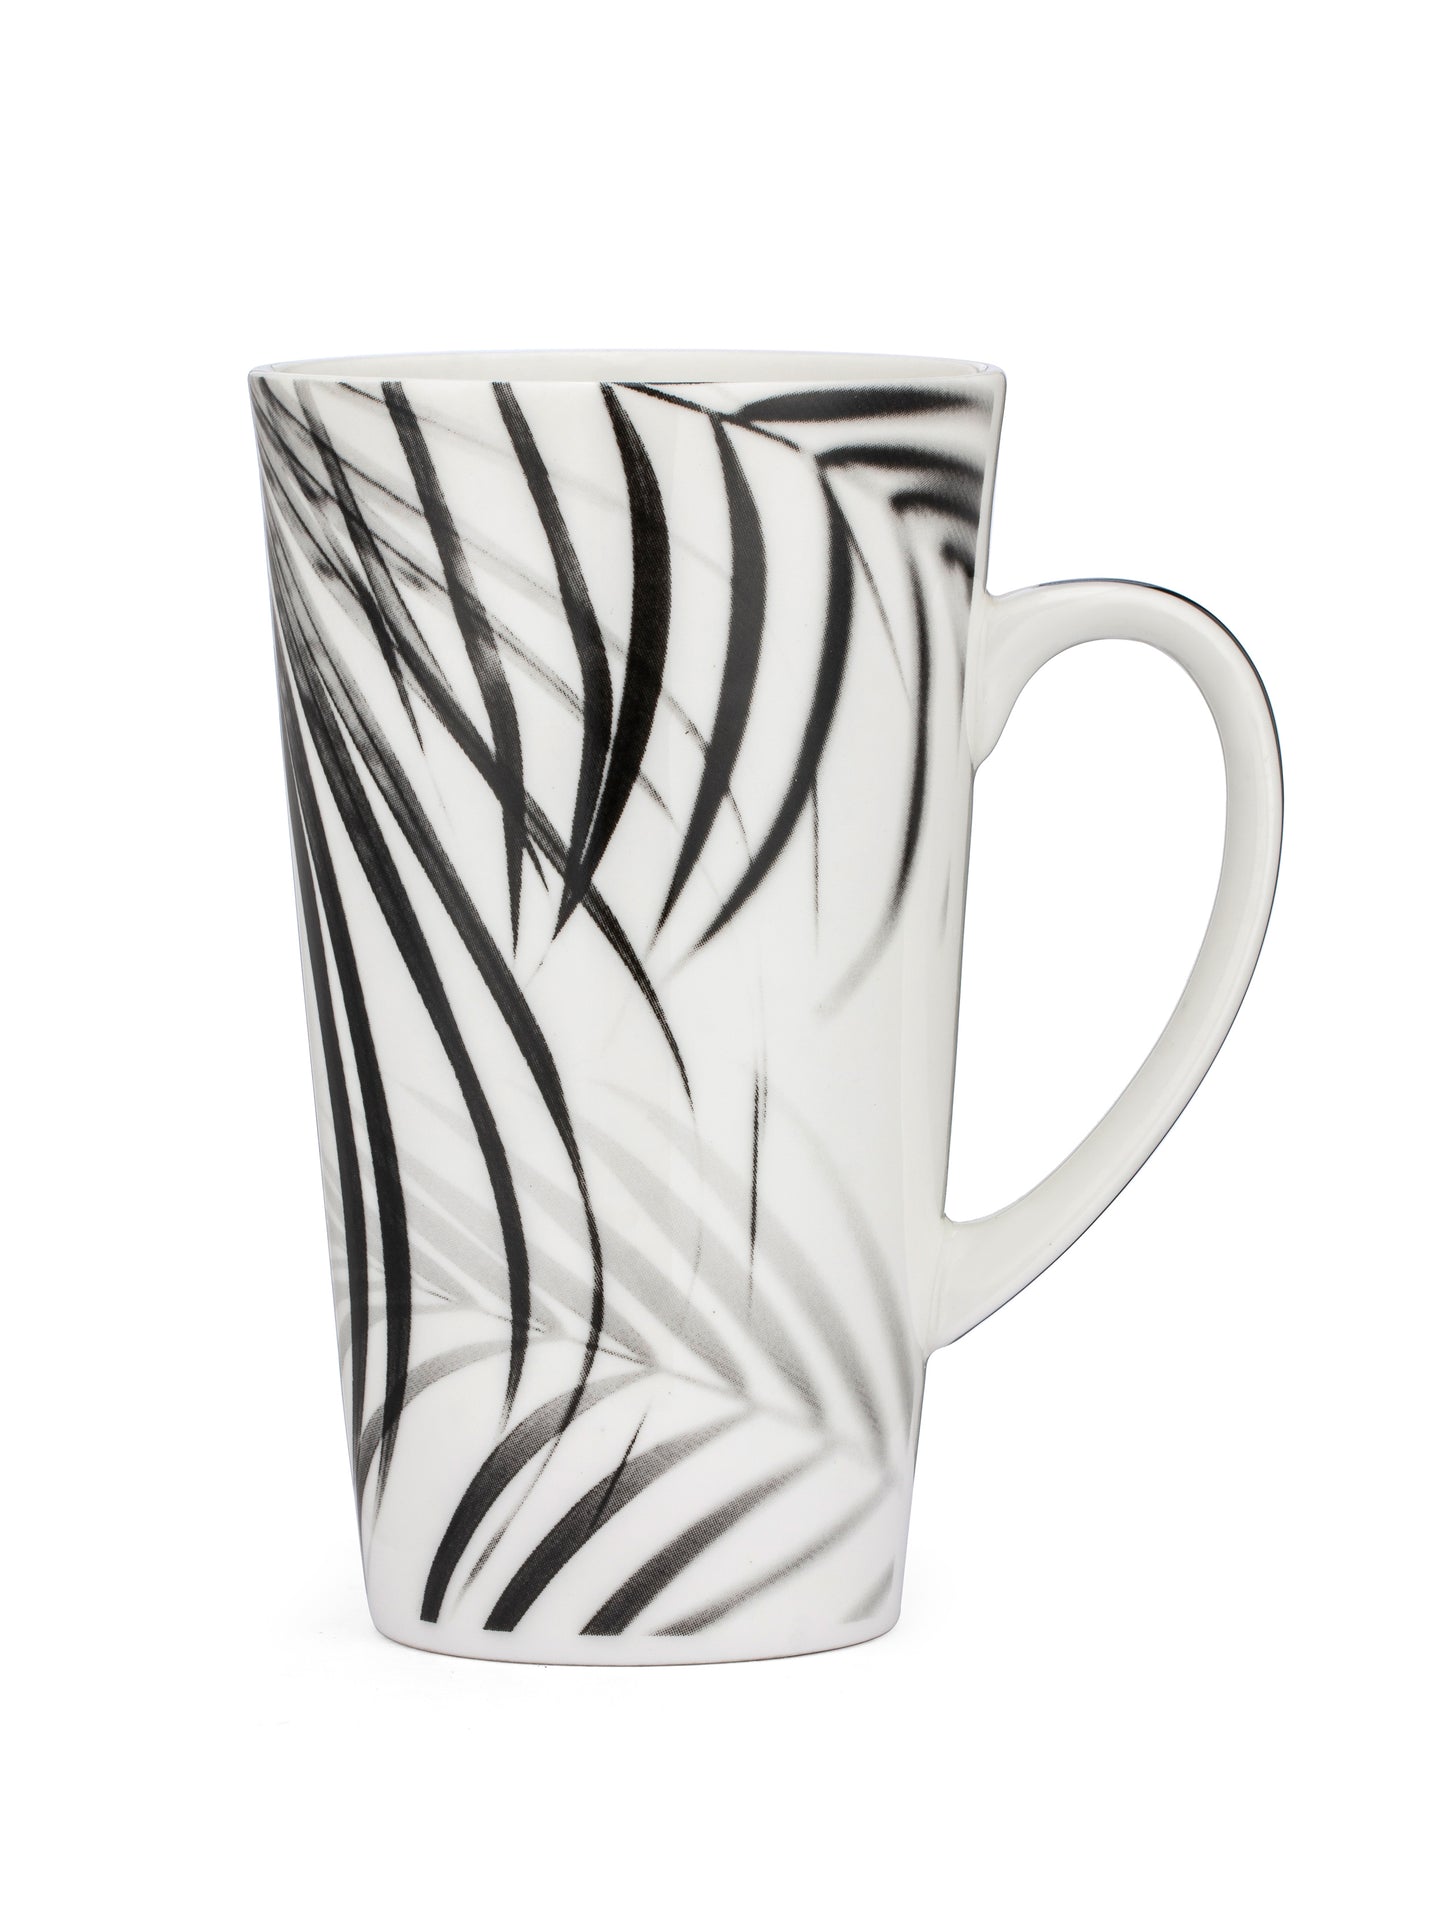 Tall Monochrome Coffee & Milk Mug, 600ml, 1 Piece (MC709)